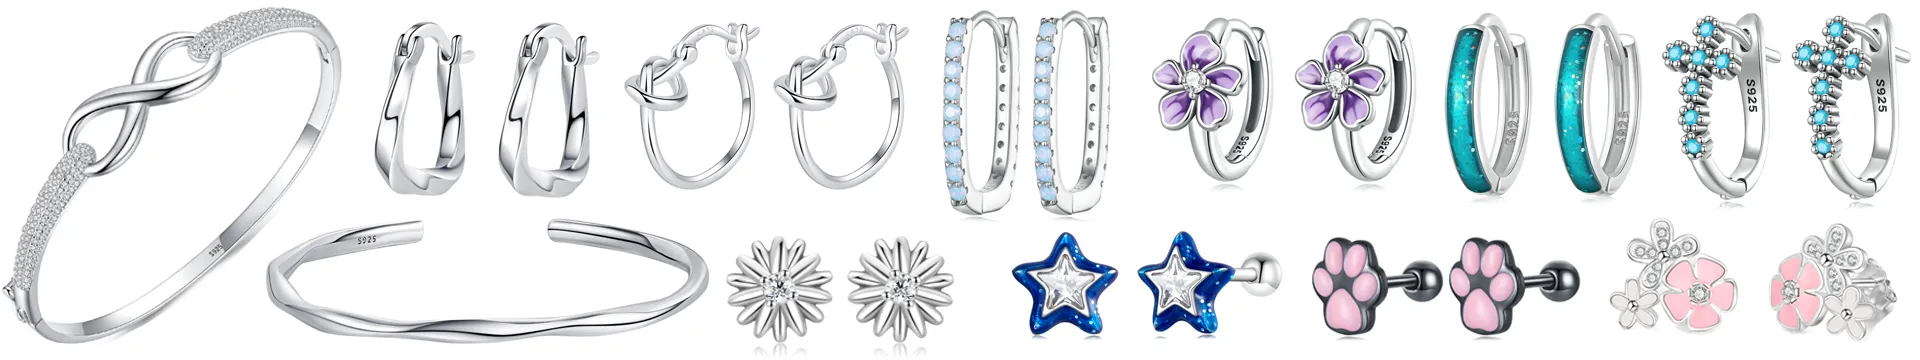 925 Silver Jewelry Wholesale Hoop Earrings Stud Earrings